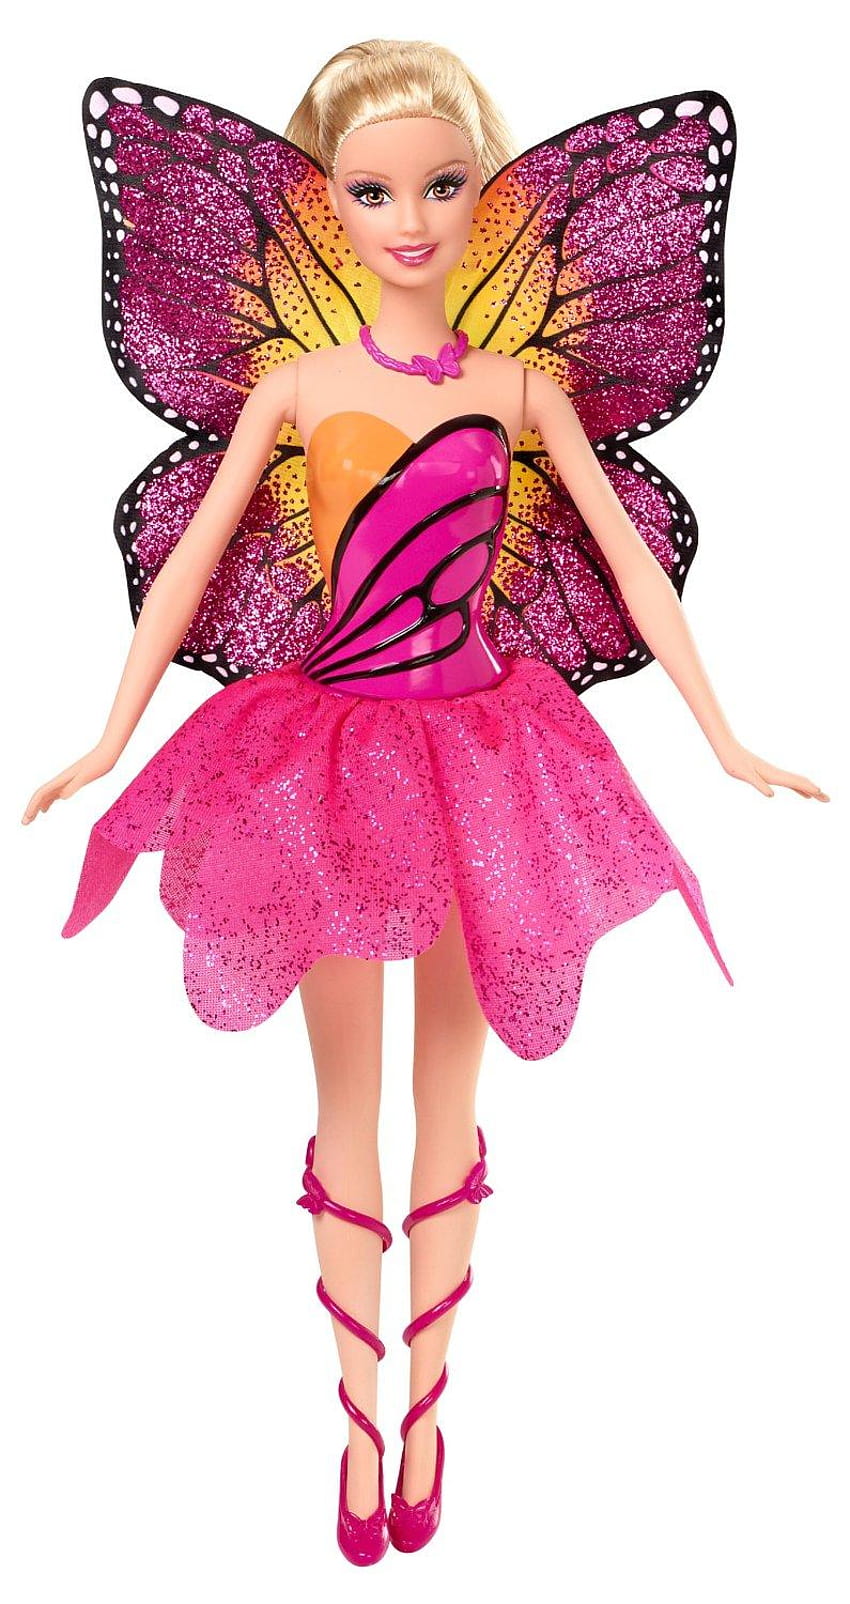 Share 155+ mariposa barbie wallpaper latest - 3tdesign.edu.vn